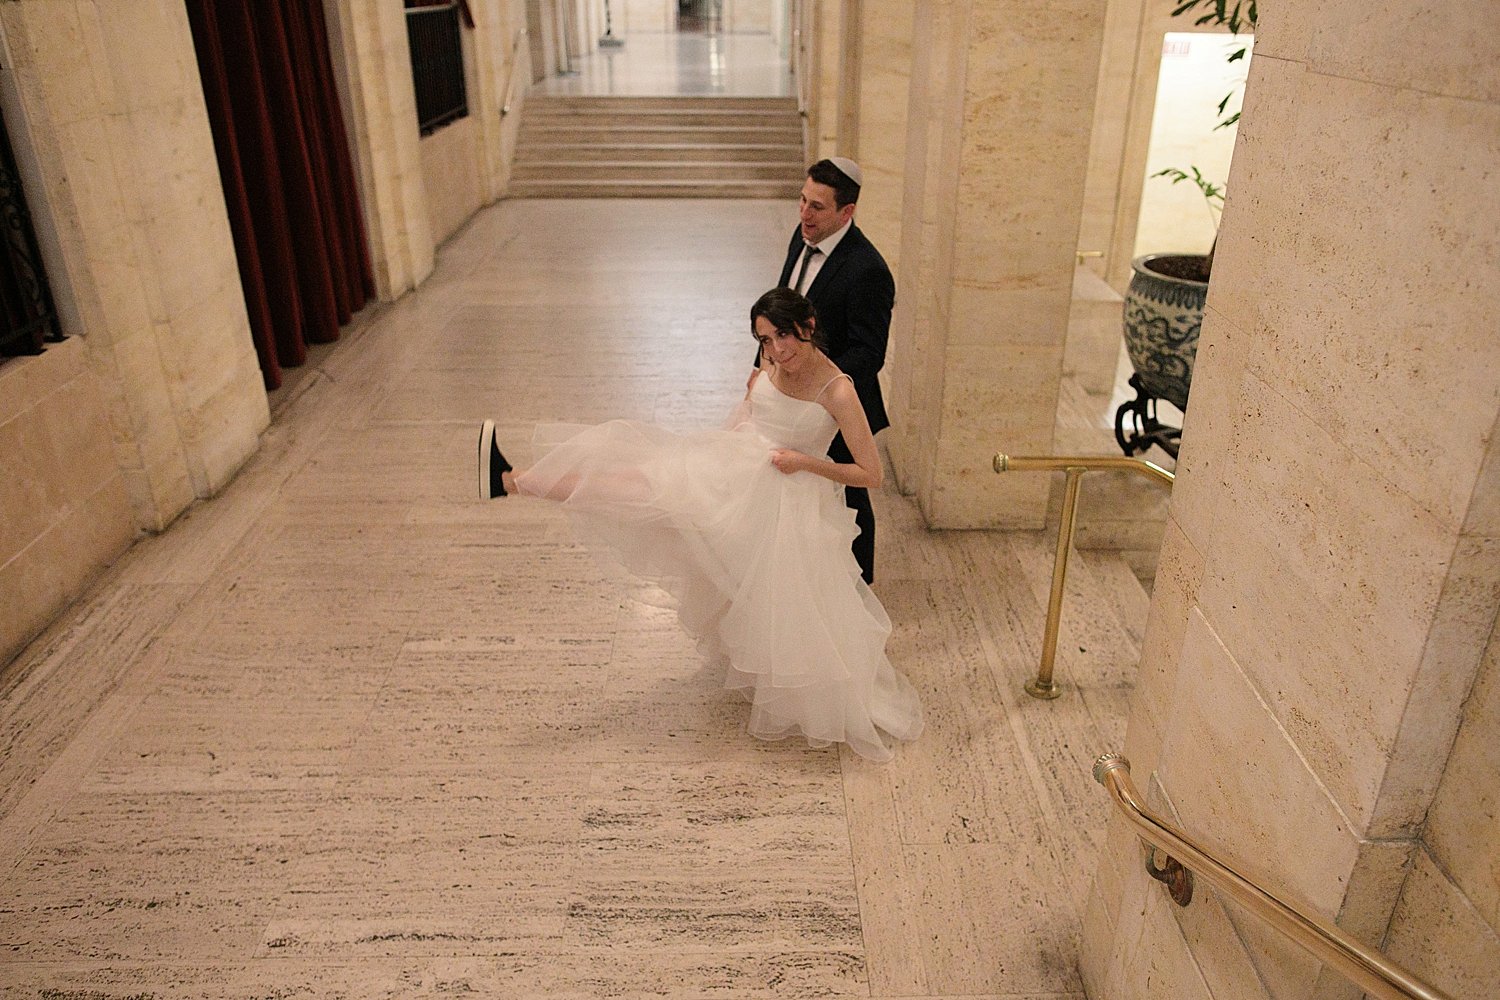 Chicago art musuem documentary wedding photographer  0076.jpg